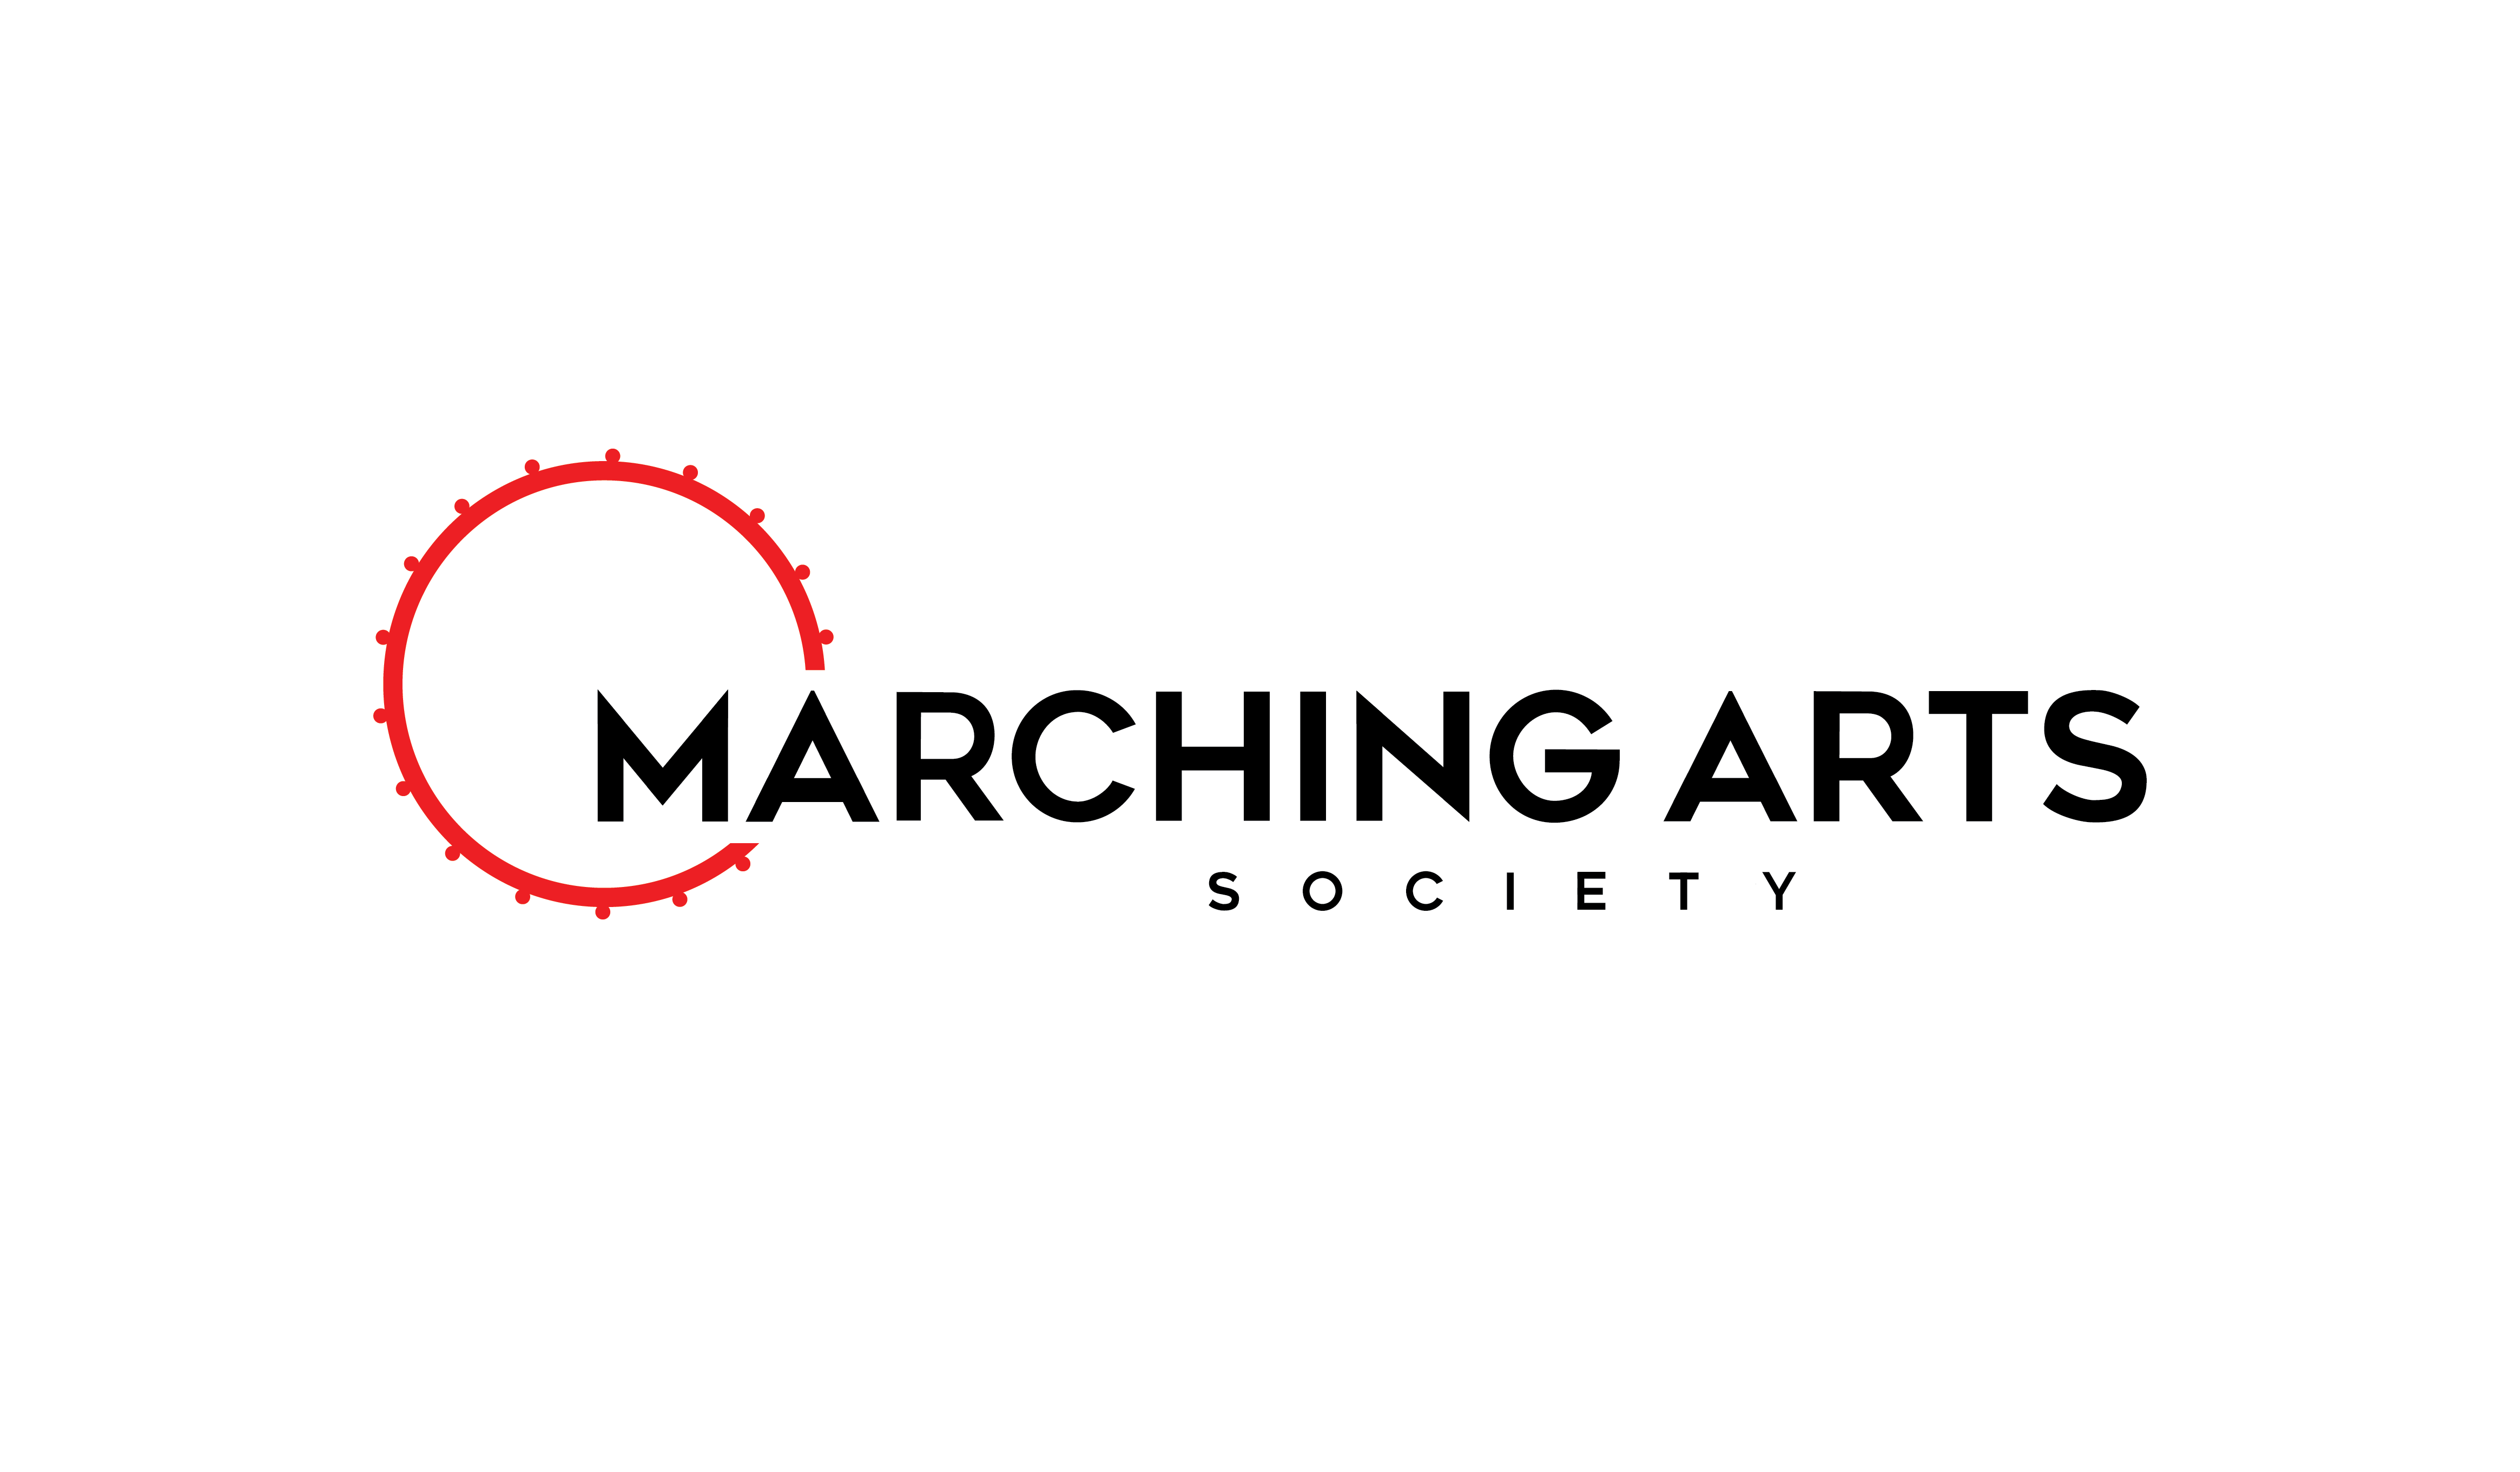 Marching Arts Society